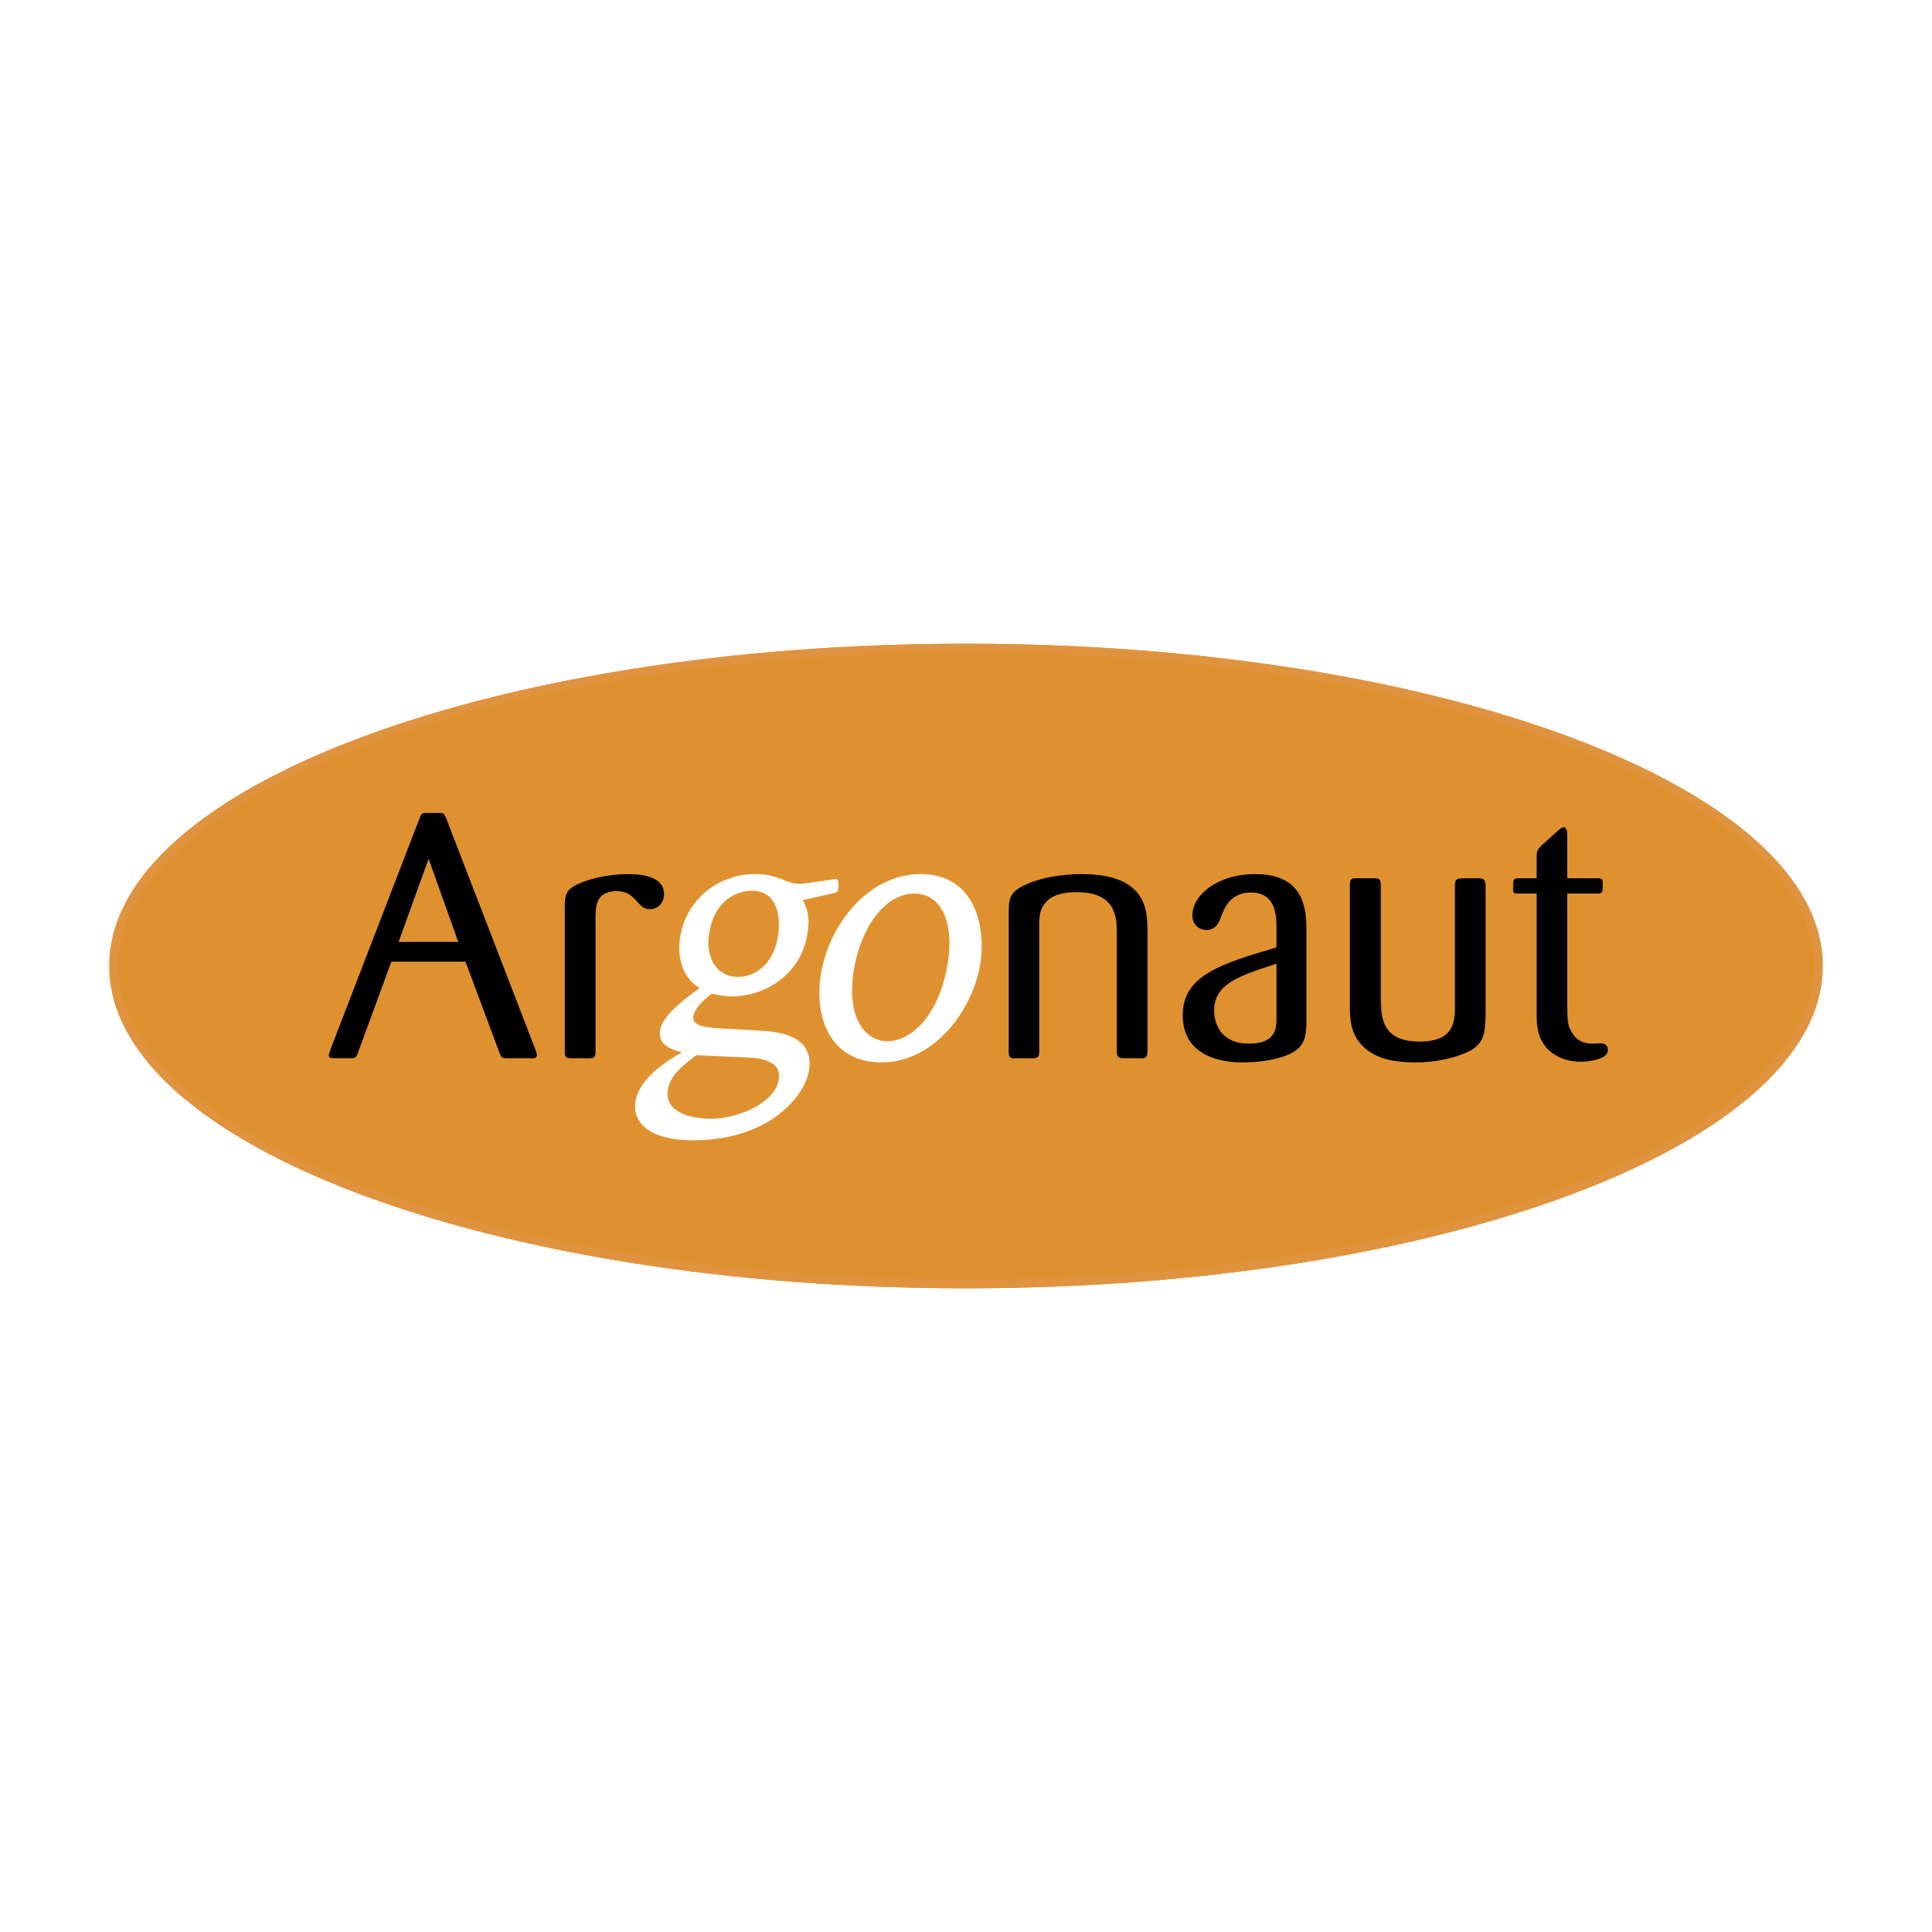 Argonaut Logo - Argonaut Logo PNG Transparent & SVG Vector